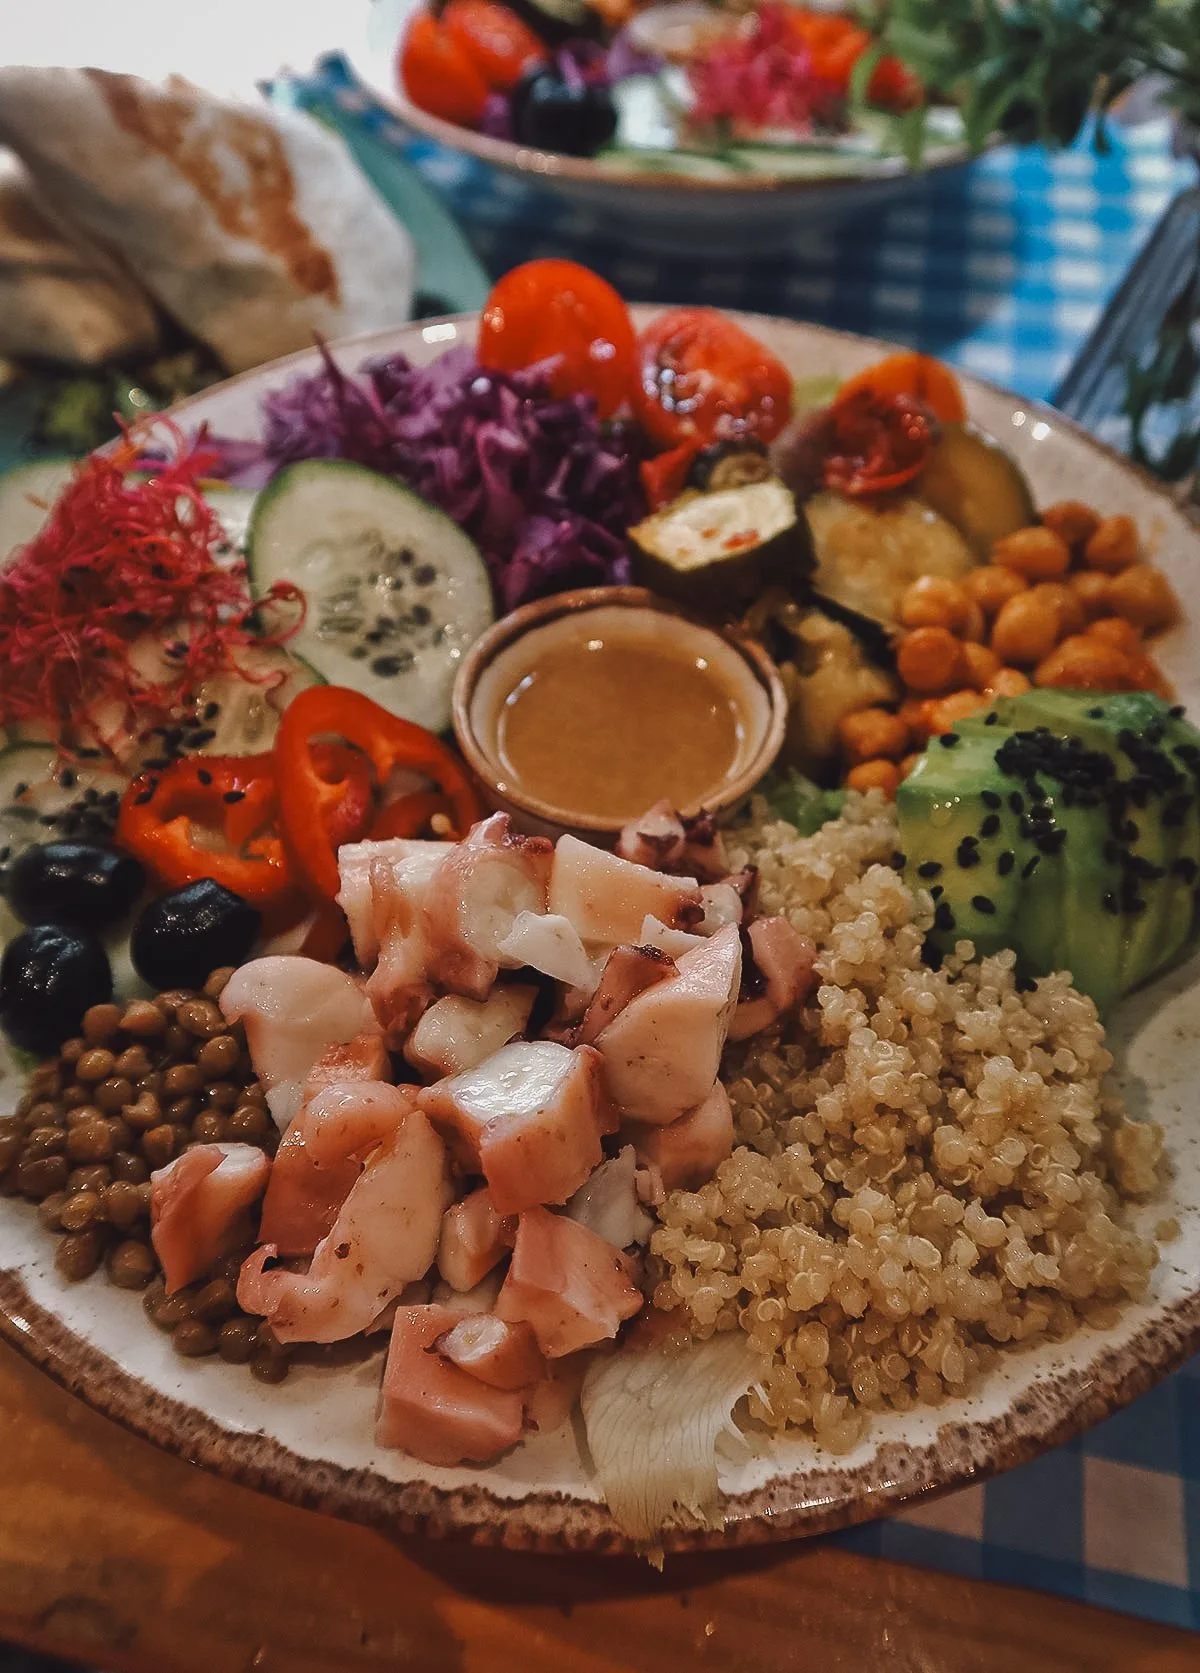 Octopus bowl at a restaurant in Split